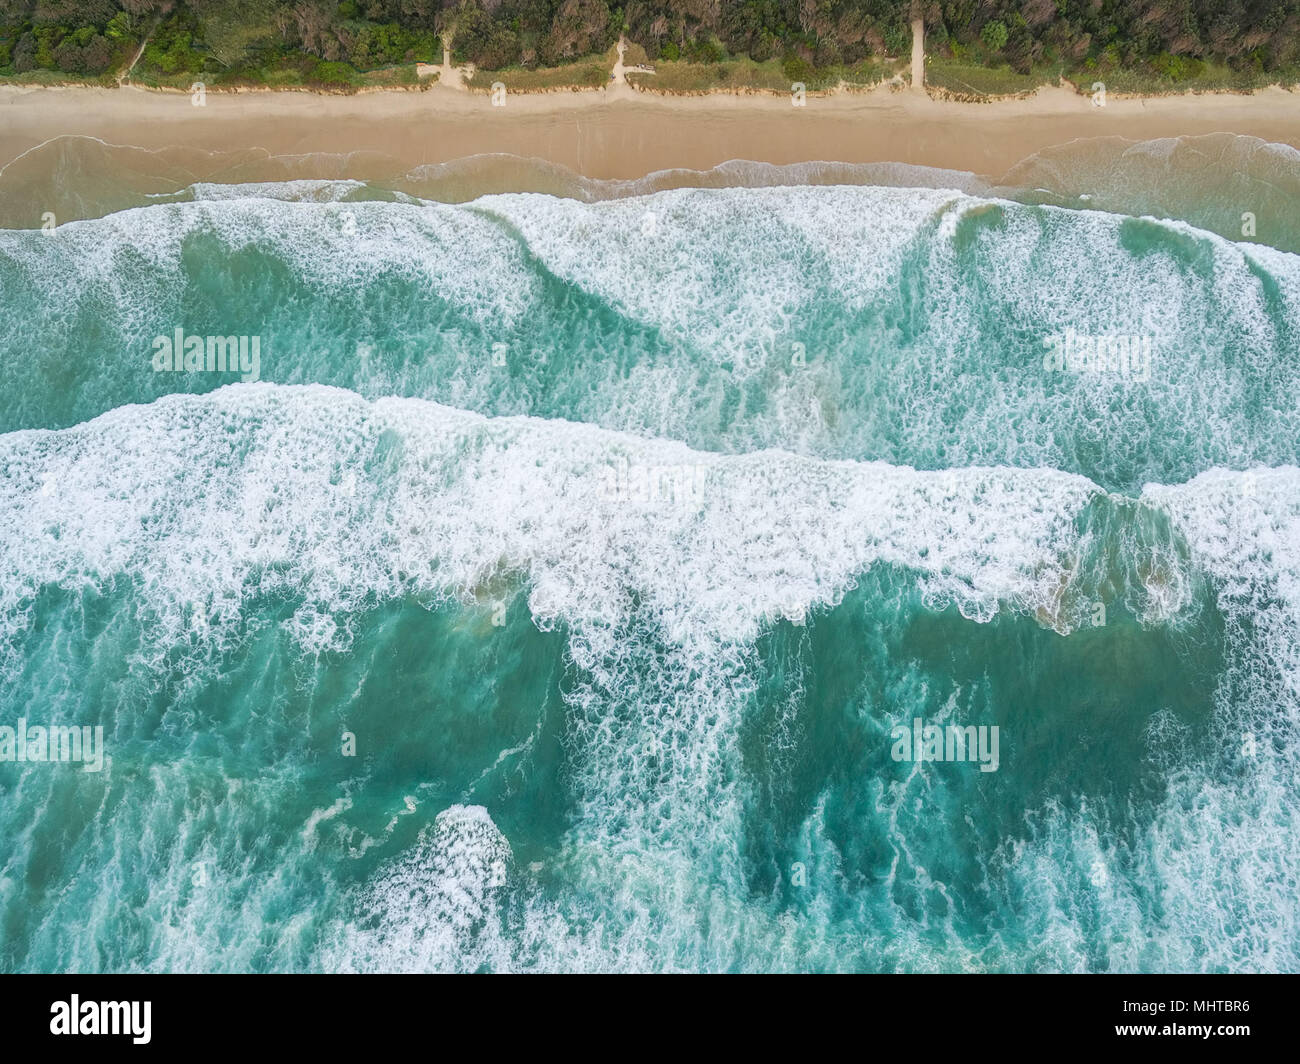 Looking down at large ocean waves breaking on sandy beach Stock Photo